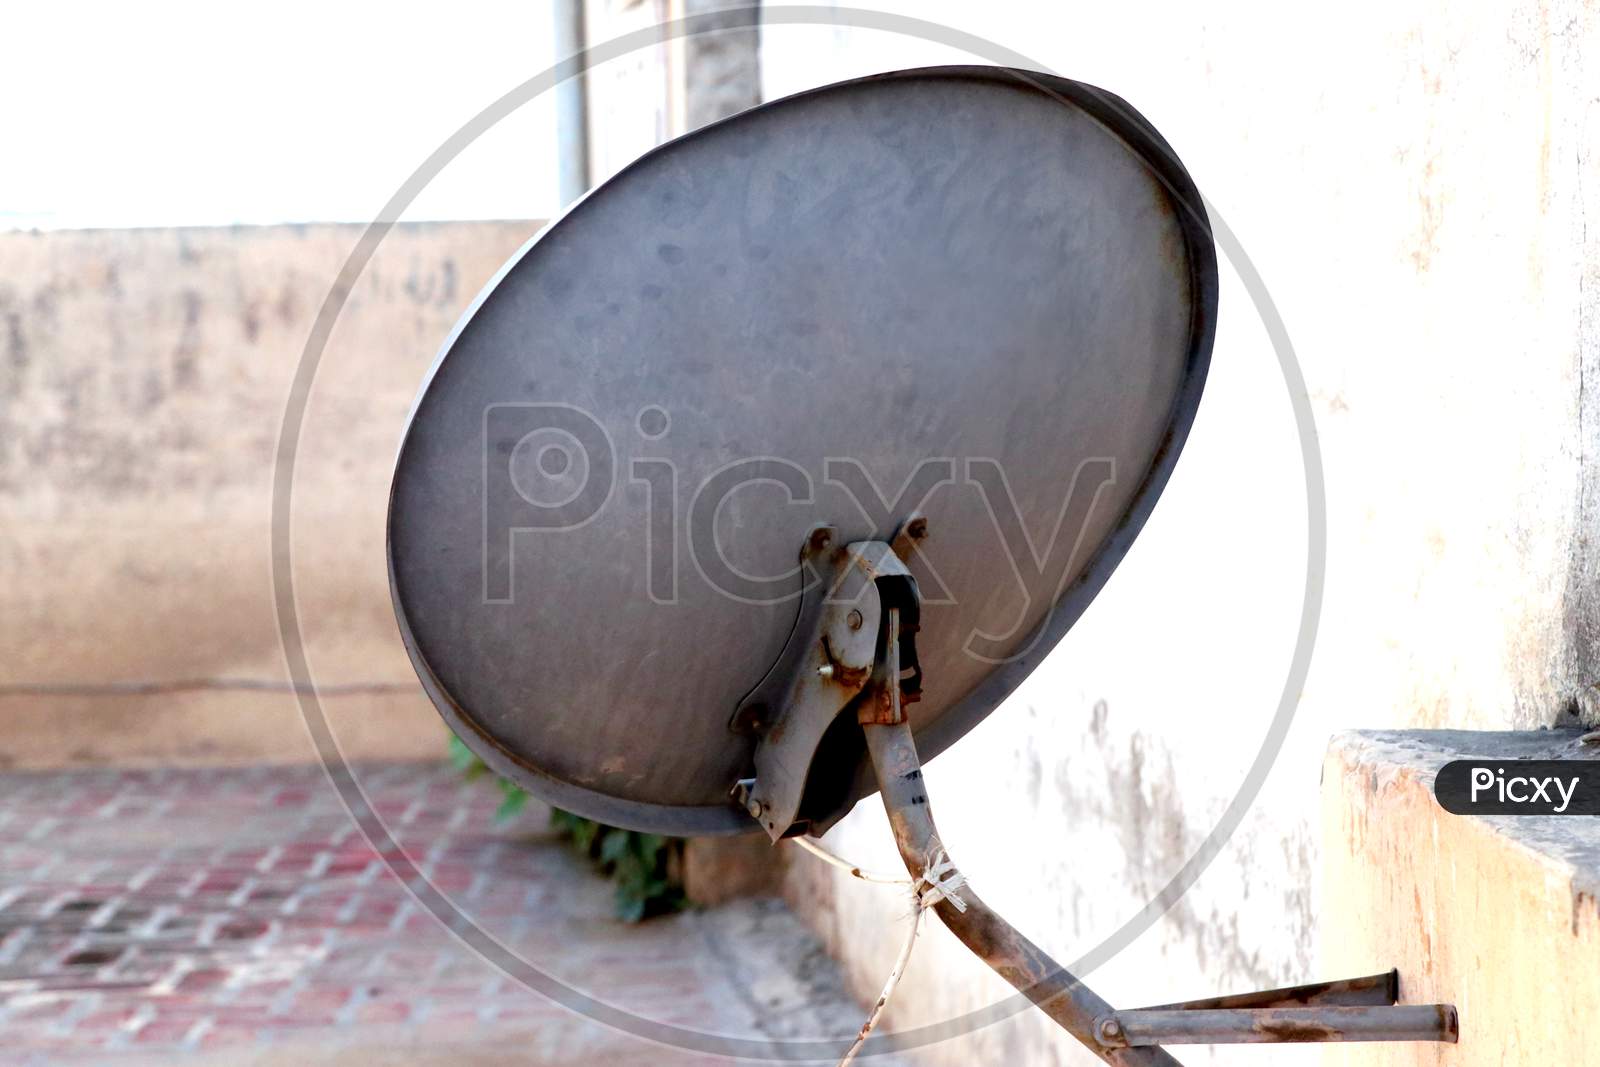 Old Rusty Television Antenna Image, Satellite Dish Image